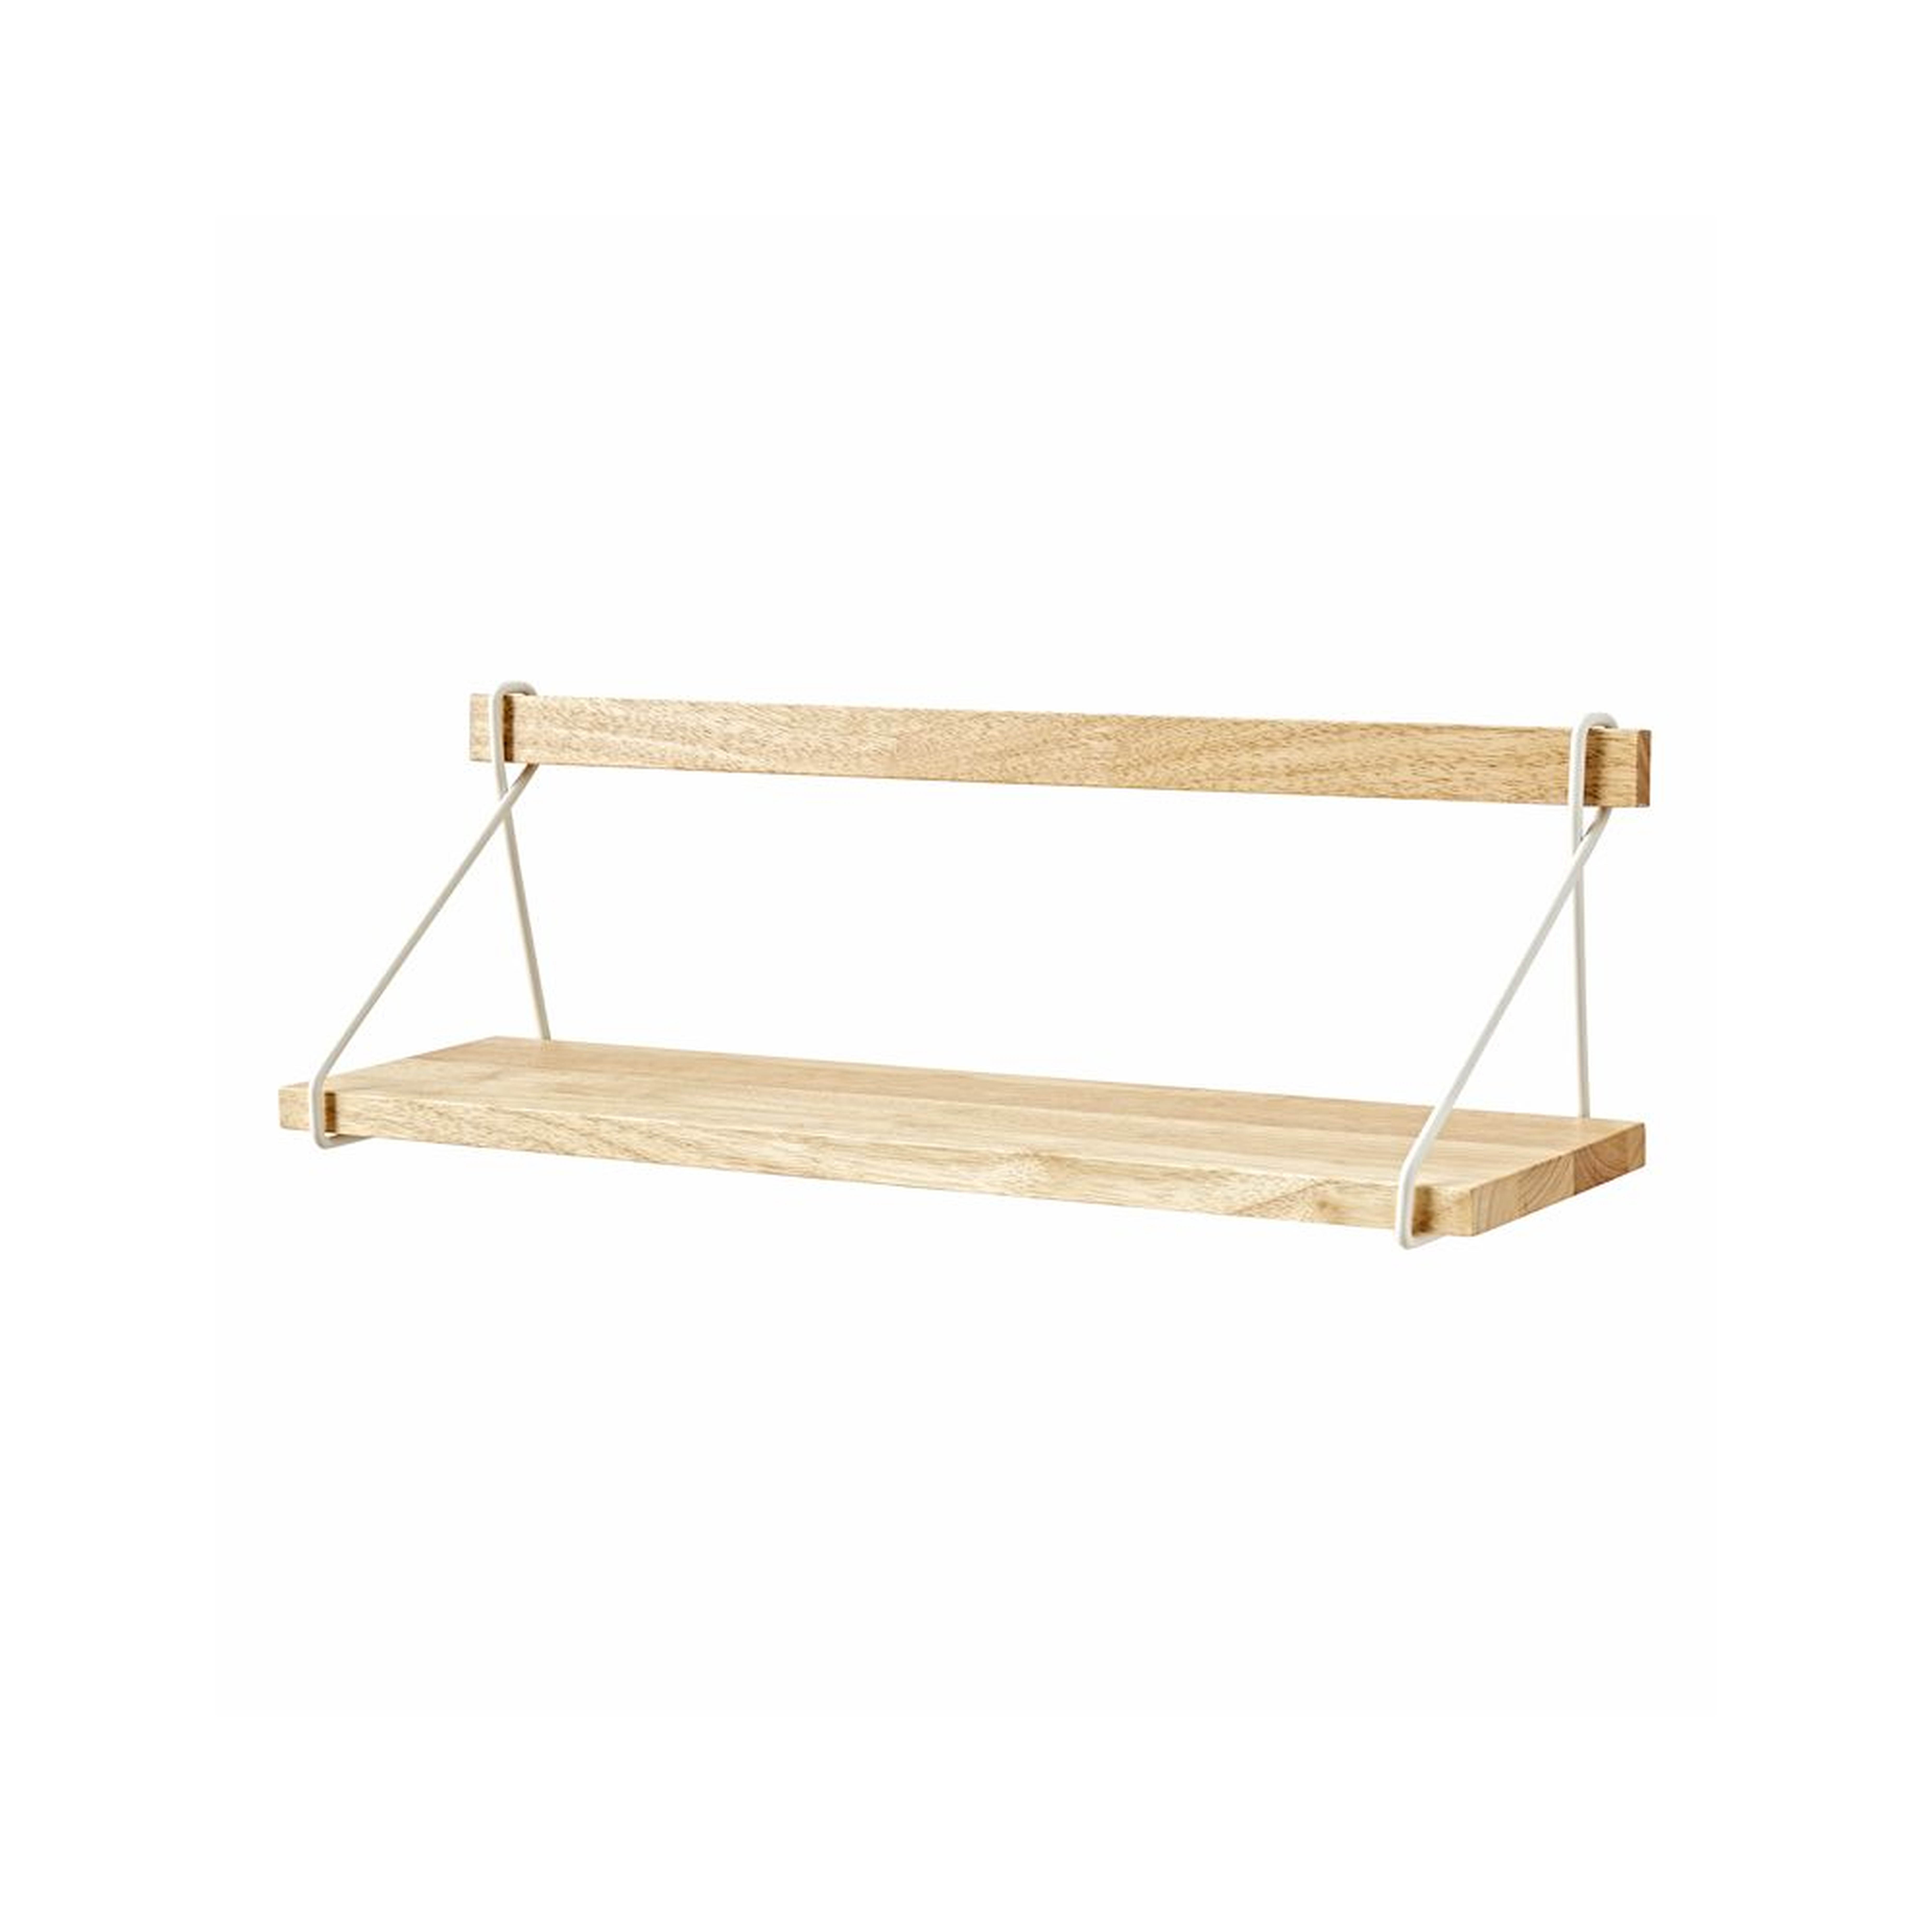 Wood Suspension Shelf - Crate and Barrel